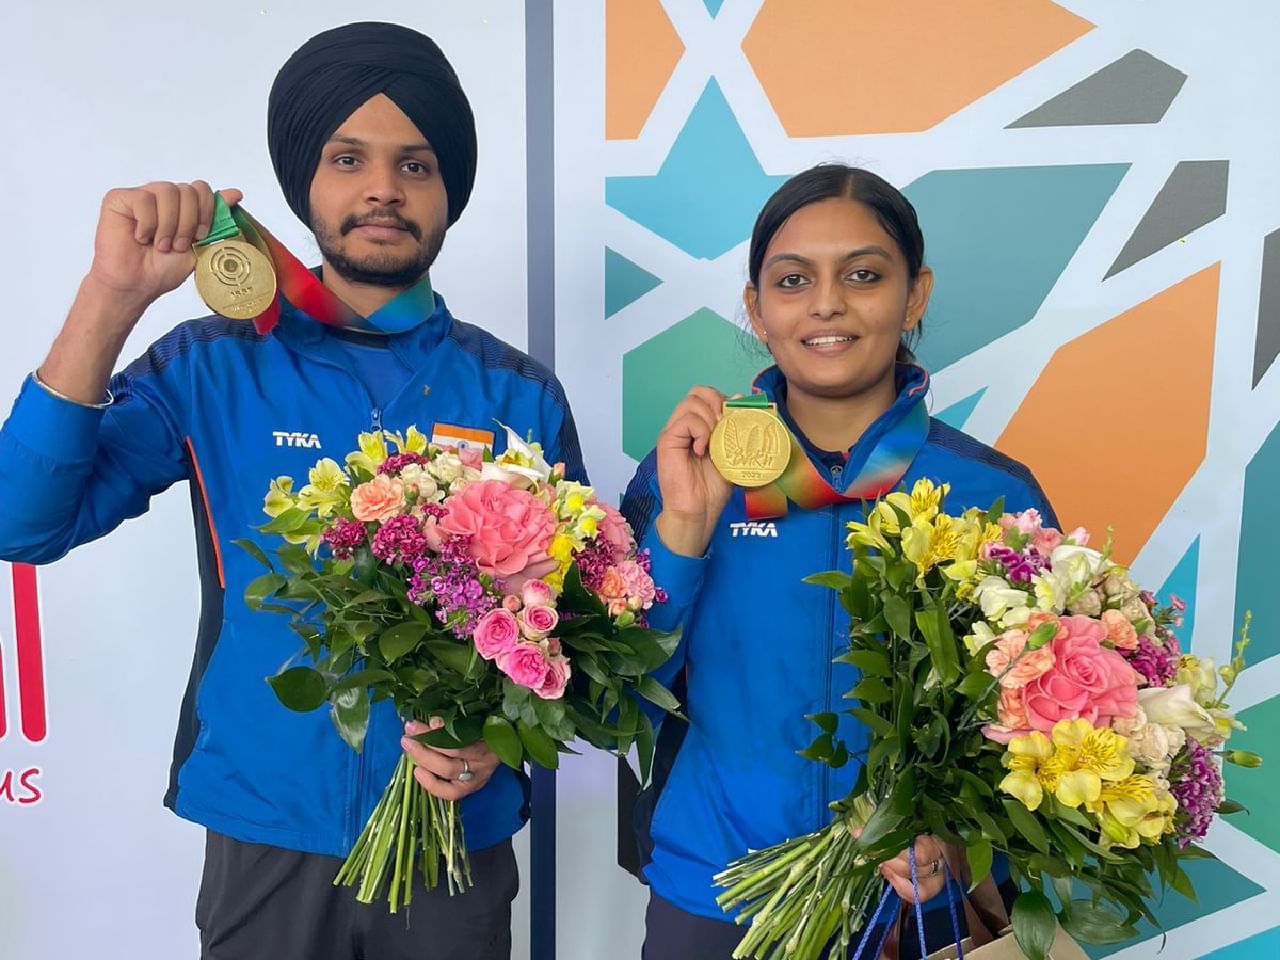 Indian shooters Divya and Sarabjot win 10m pistol mixed team gold in Azerbaijan